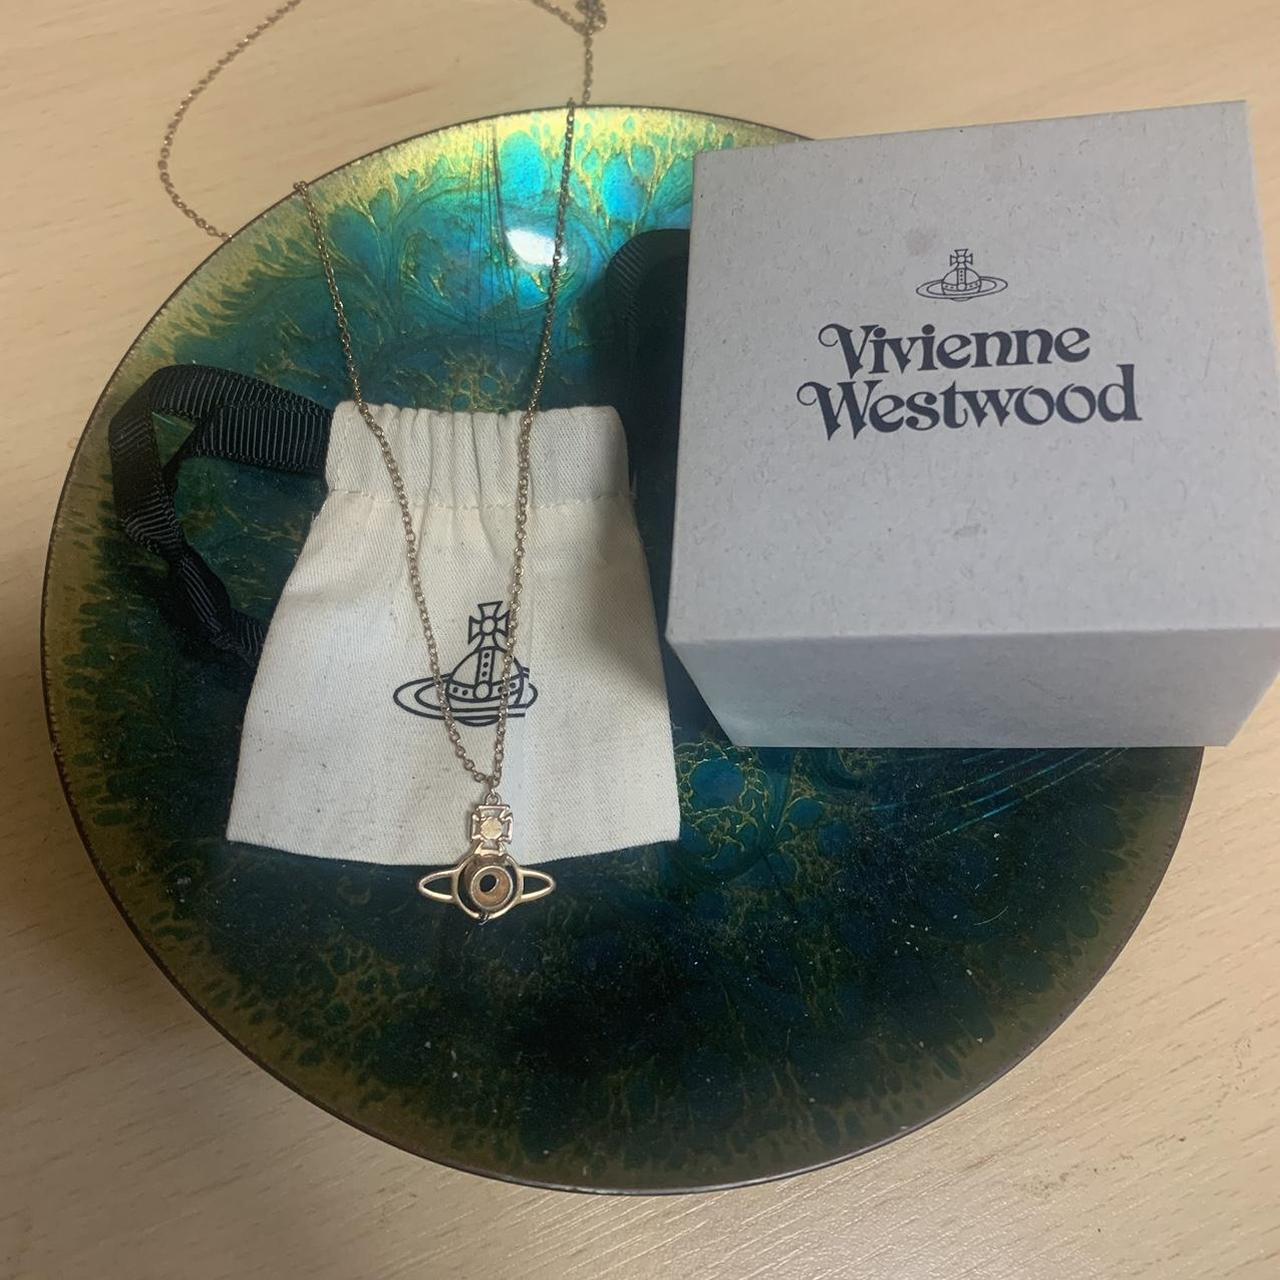 Vivienne Westwood gold orb pendant necklace, worn... - Depop